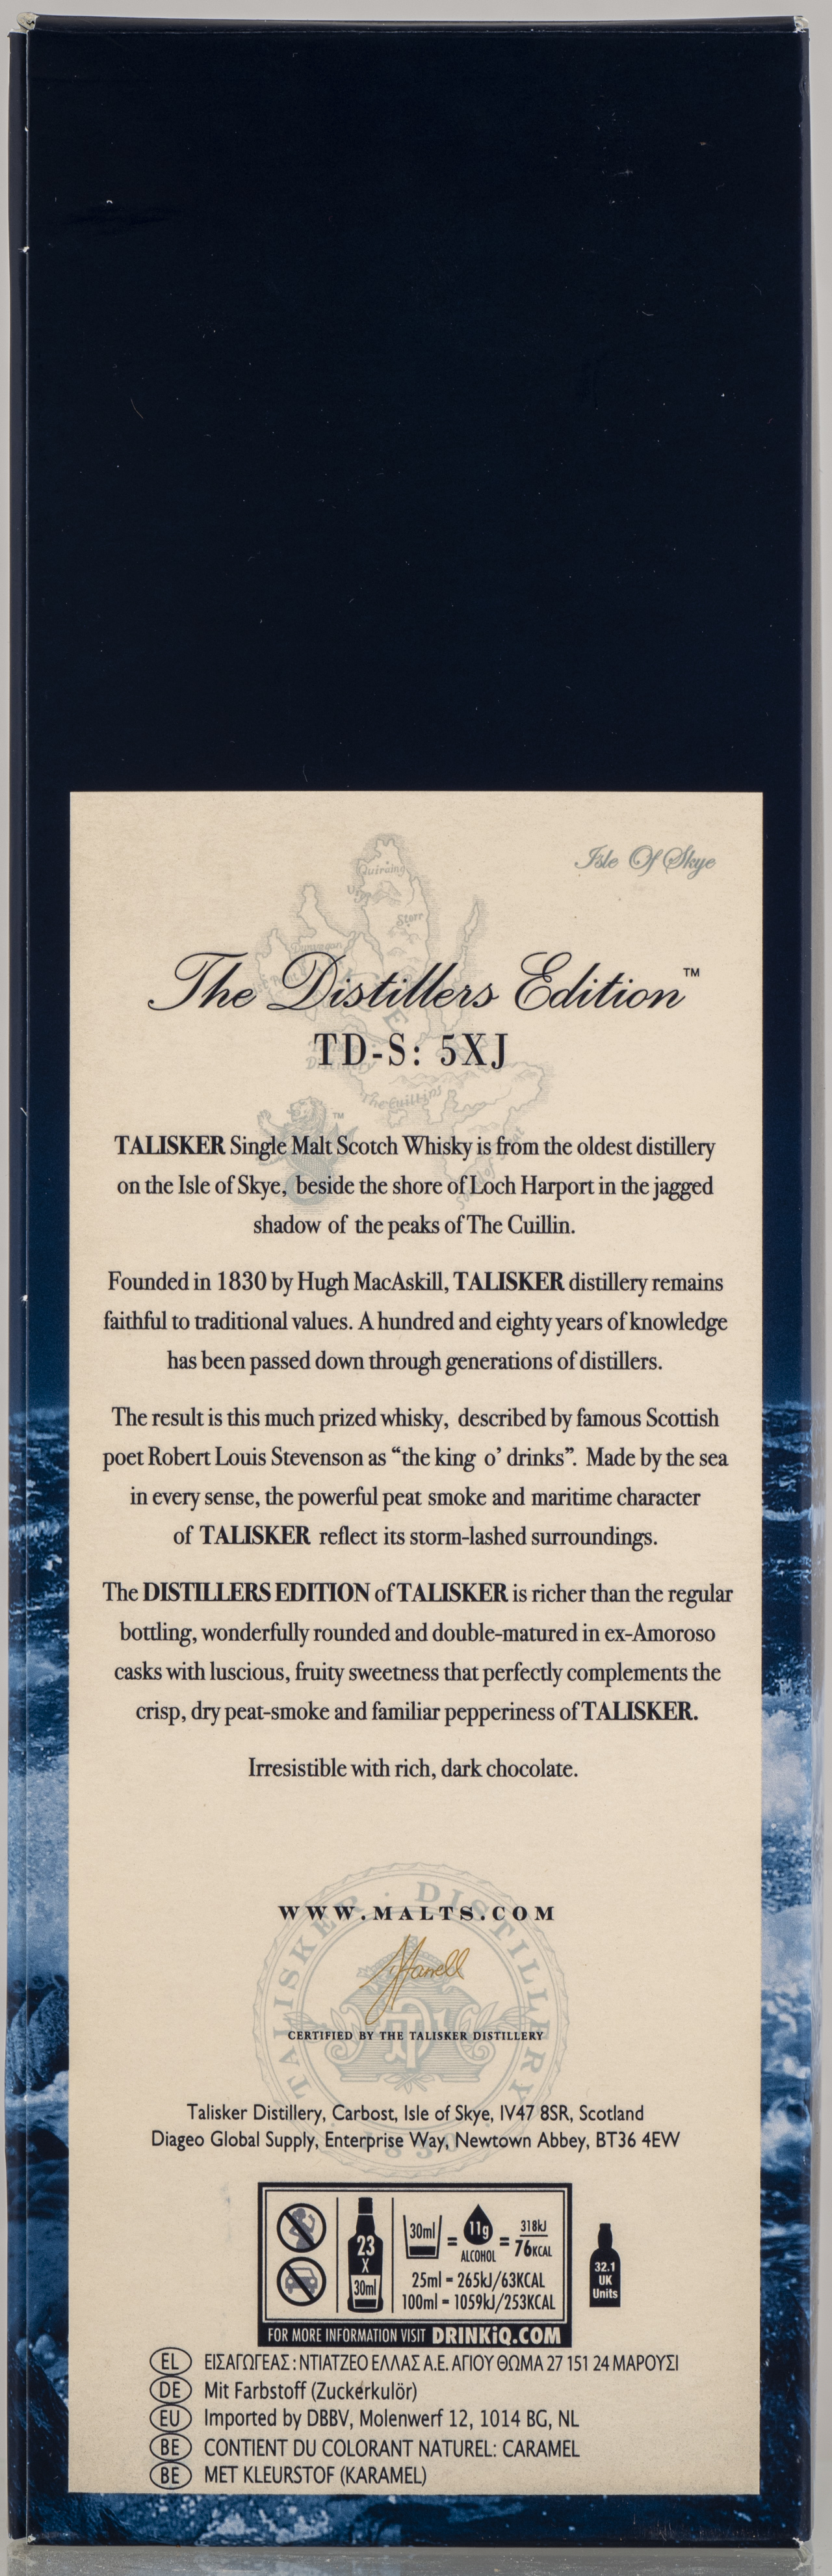 Billede: PHC_7305 - Talisker Distillers Edition TD-S 5XJ - box back.jpg